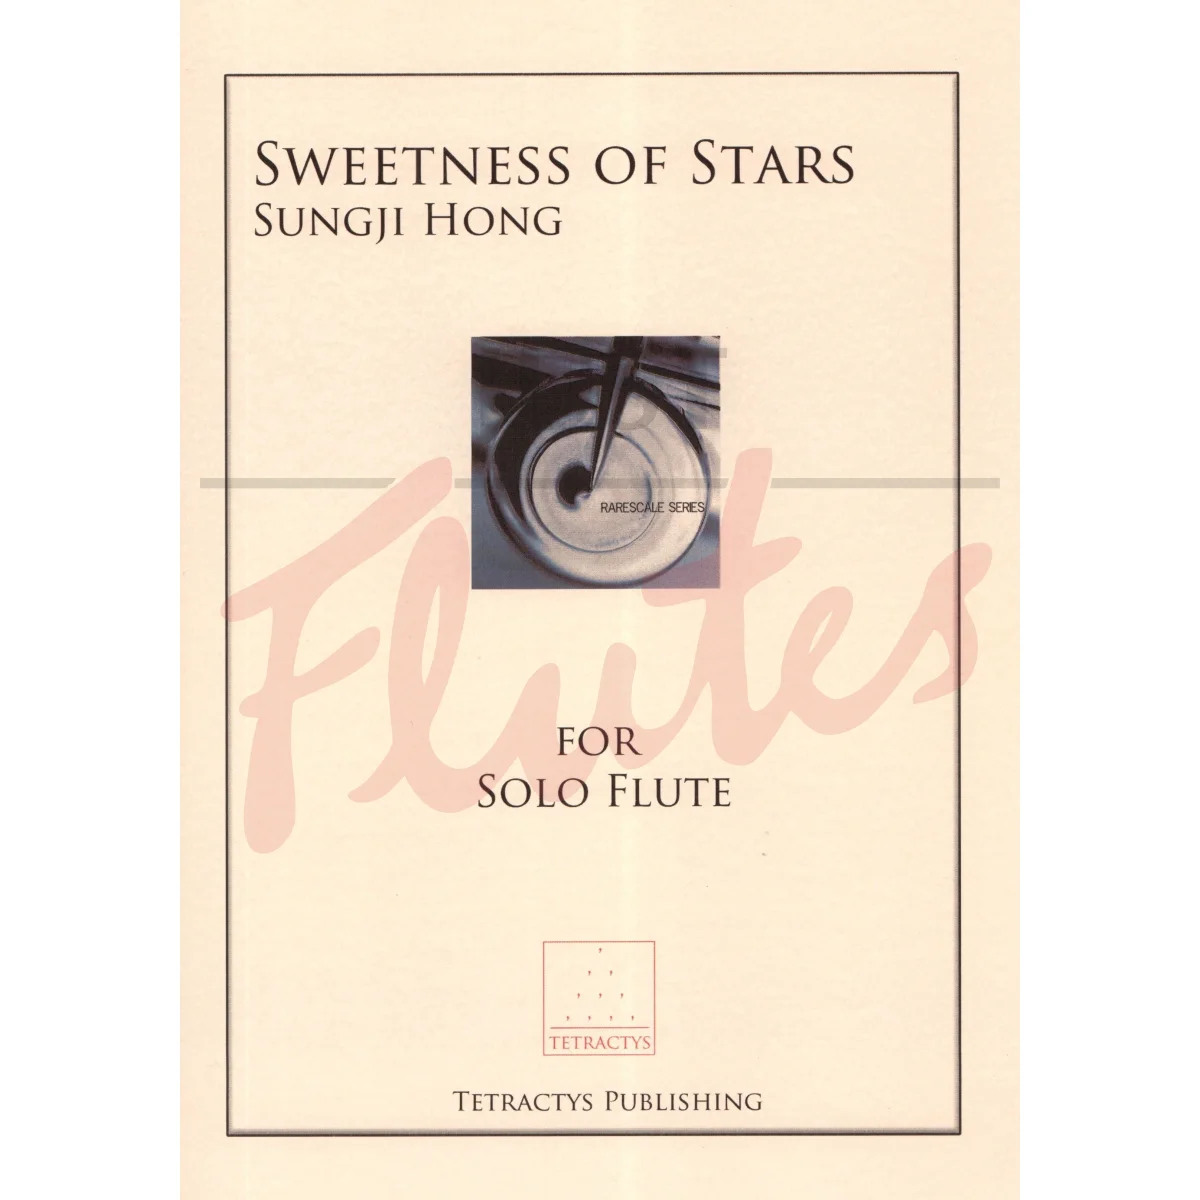 Sweetness of Stars for Solo Flute